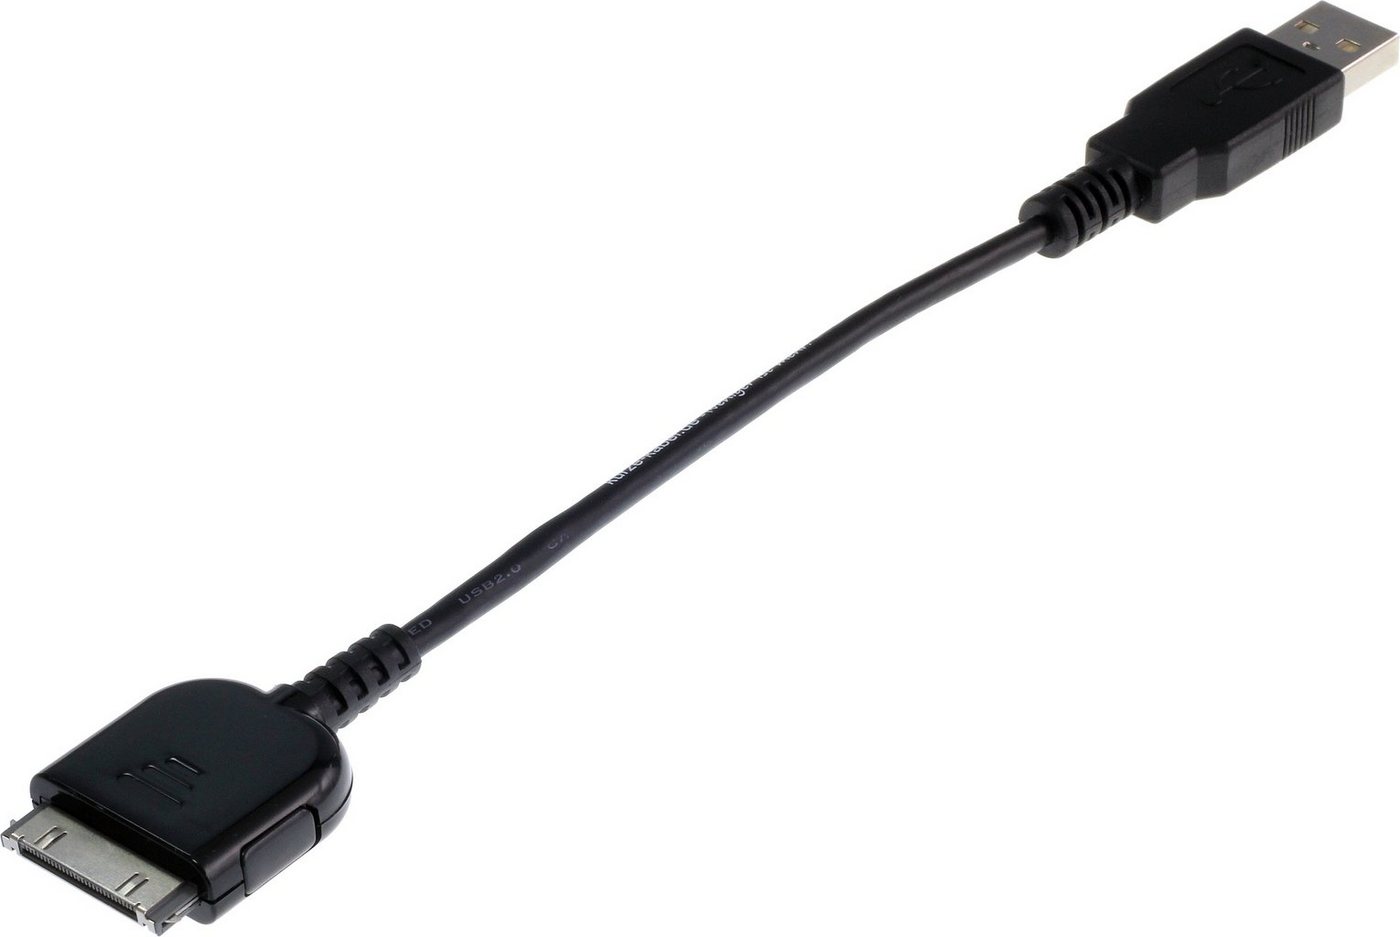 shortix 30pin-DockConnector-USB-Daten-/Ladekabel iPod, iPhone, iPad. 20/35cm. Smartphone-Kabel, USB Typ A, 30pin-DockConnector (20 cm), kurz von shortix